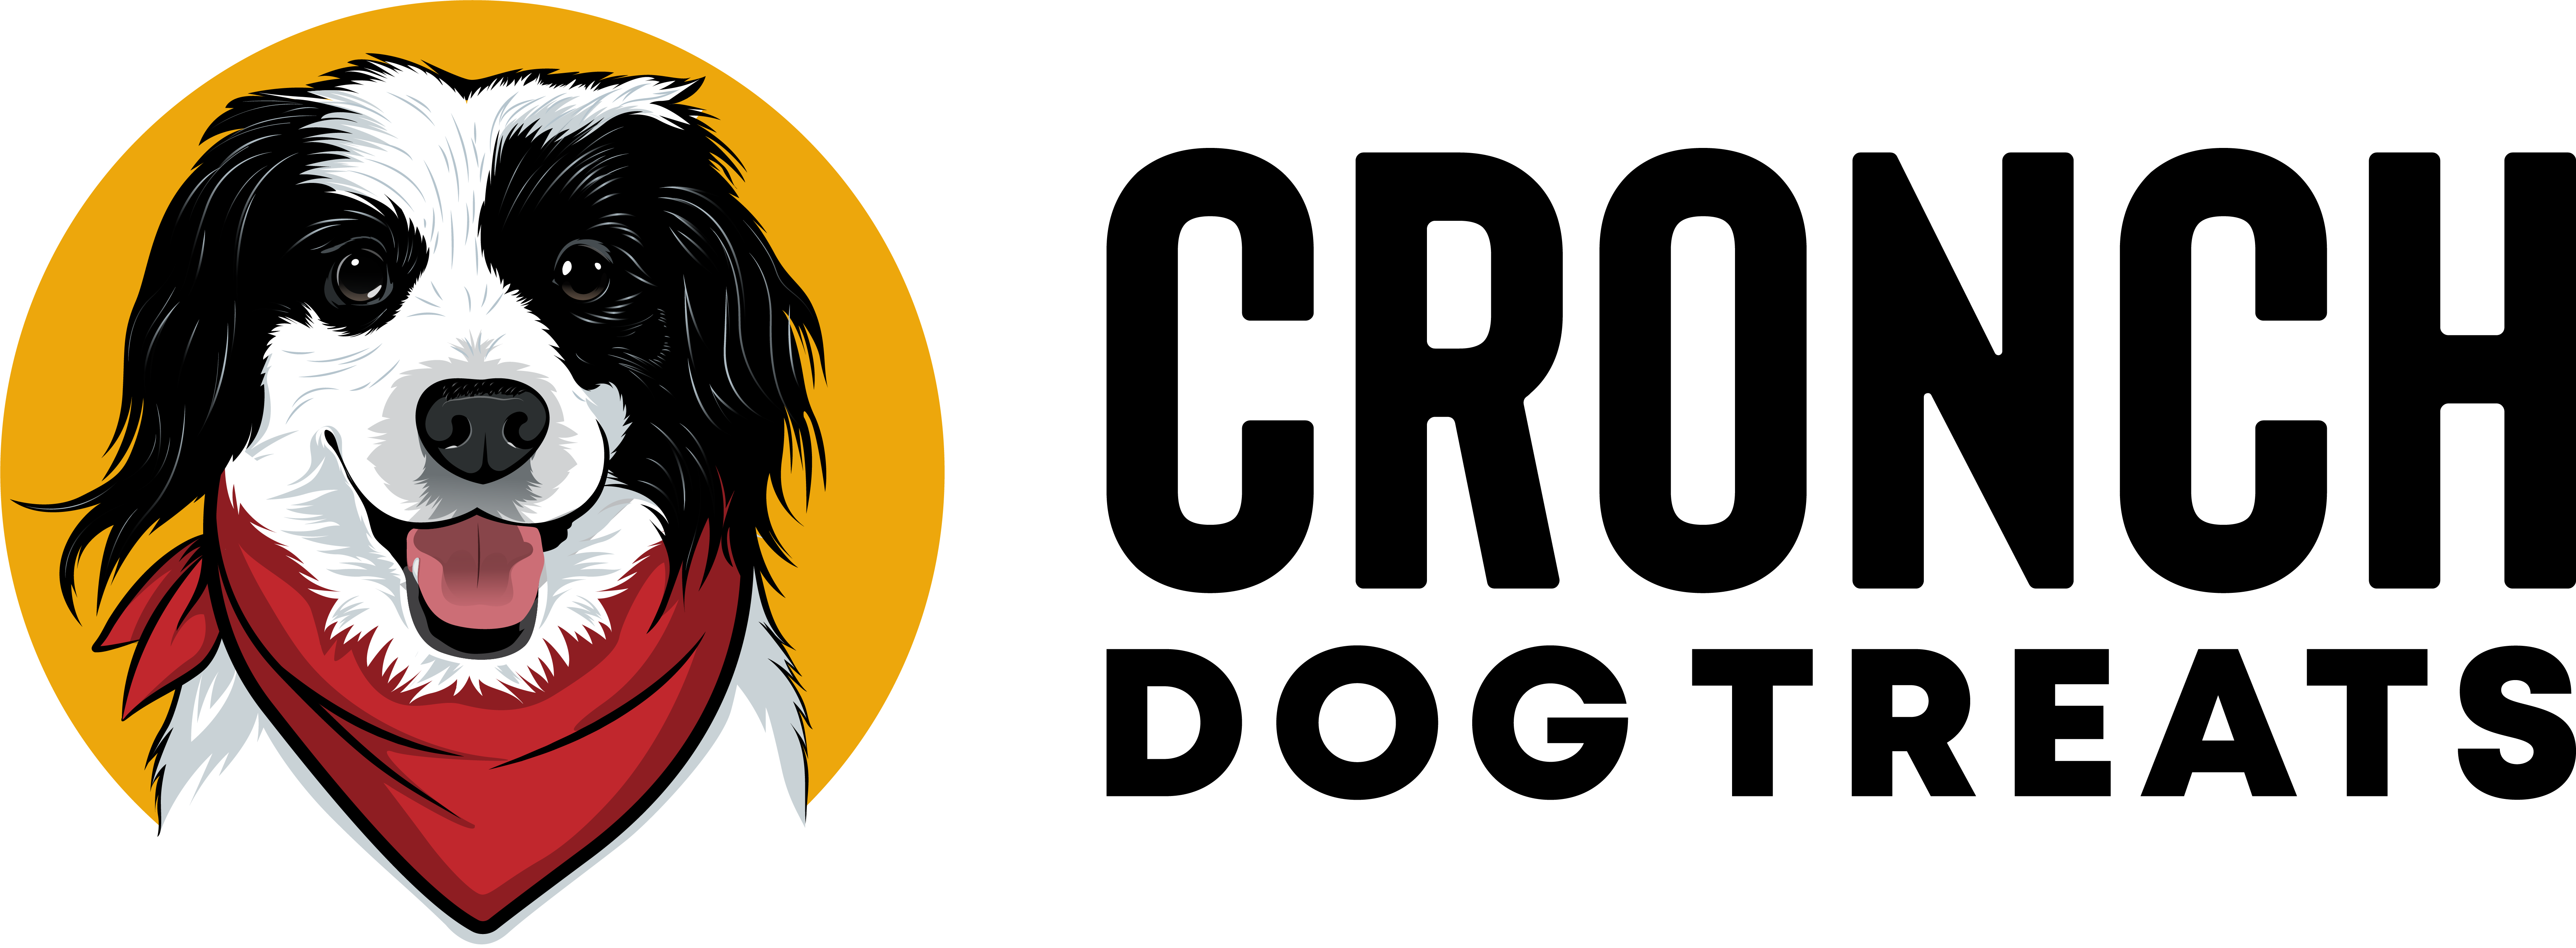 Cronch-Dog-Treat-Logo-home